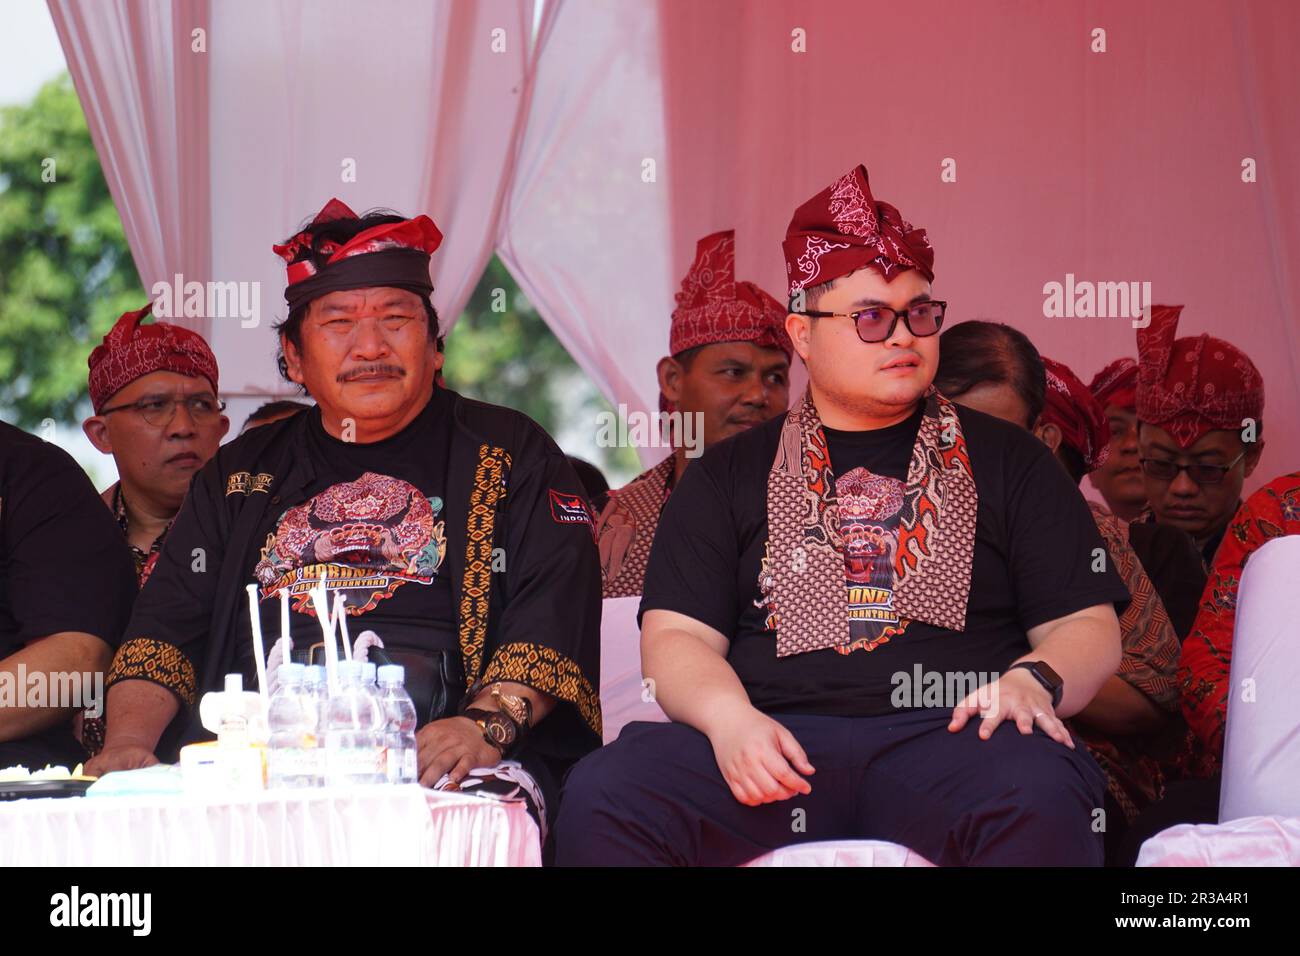 The regent of Kediri Hanindhito Himawan Pramana (Mas Dhito) On the opening 1000 barong to celebrate Kediri anniversary Stock Photo